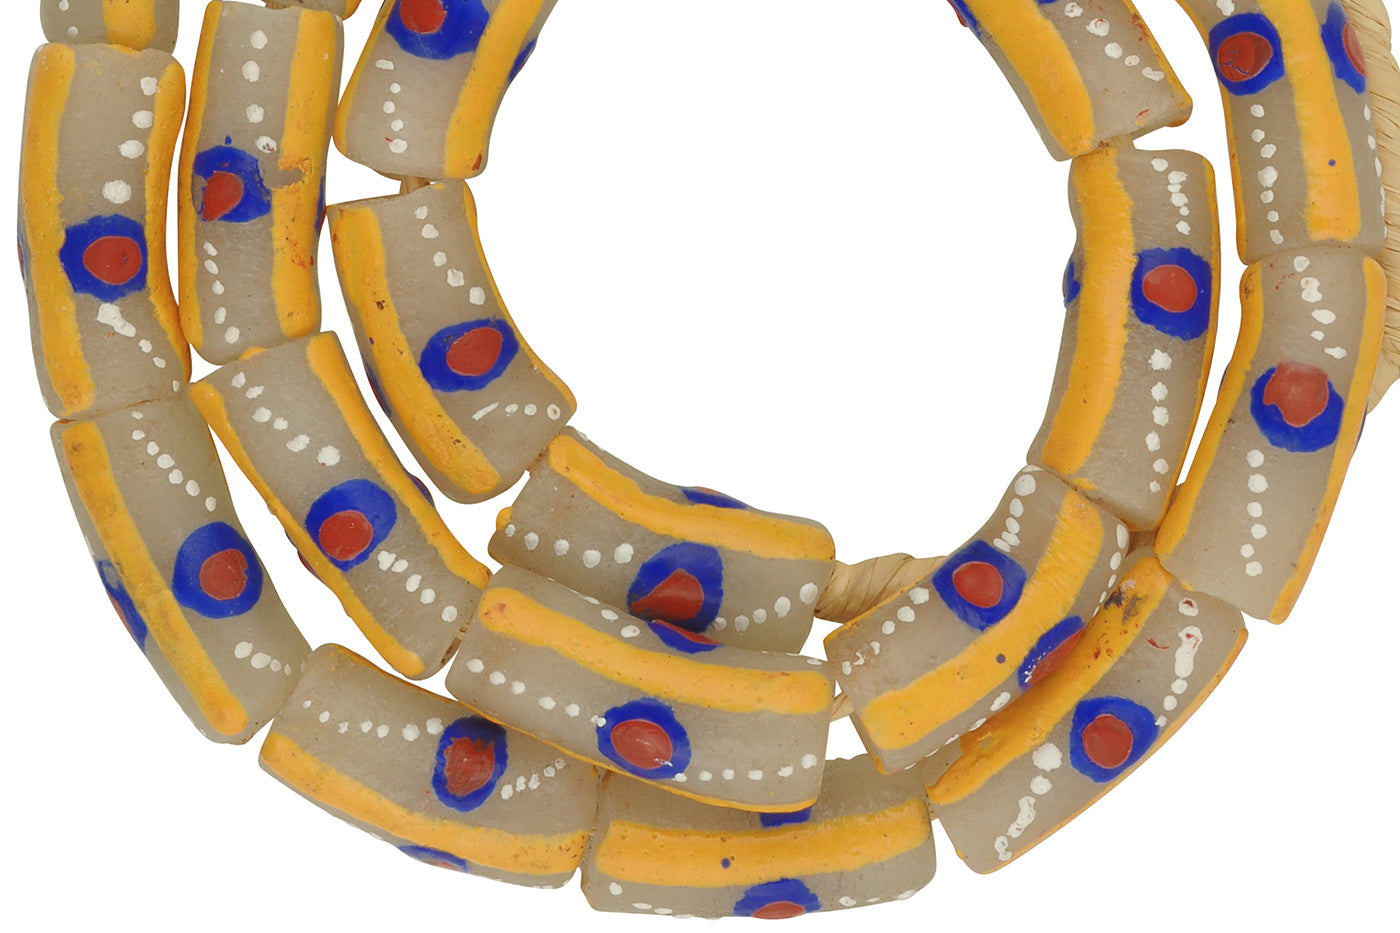 African Krobo beads powder glass recycled handmade tribal necklace Ghana